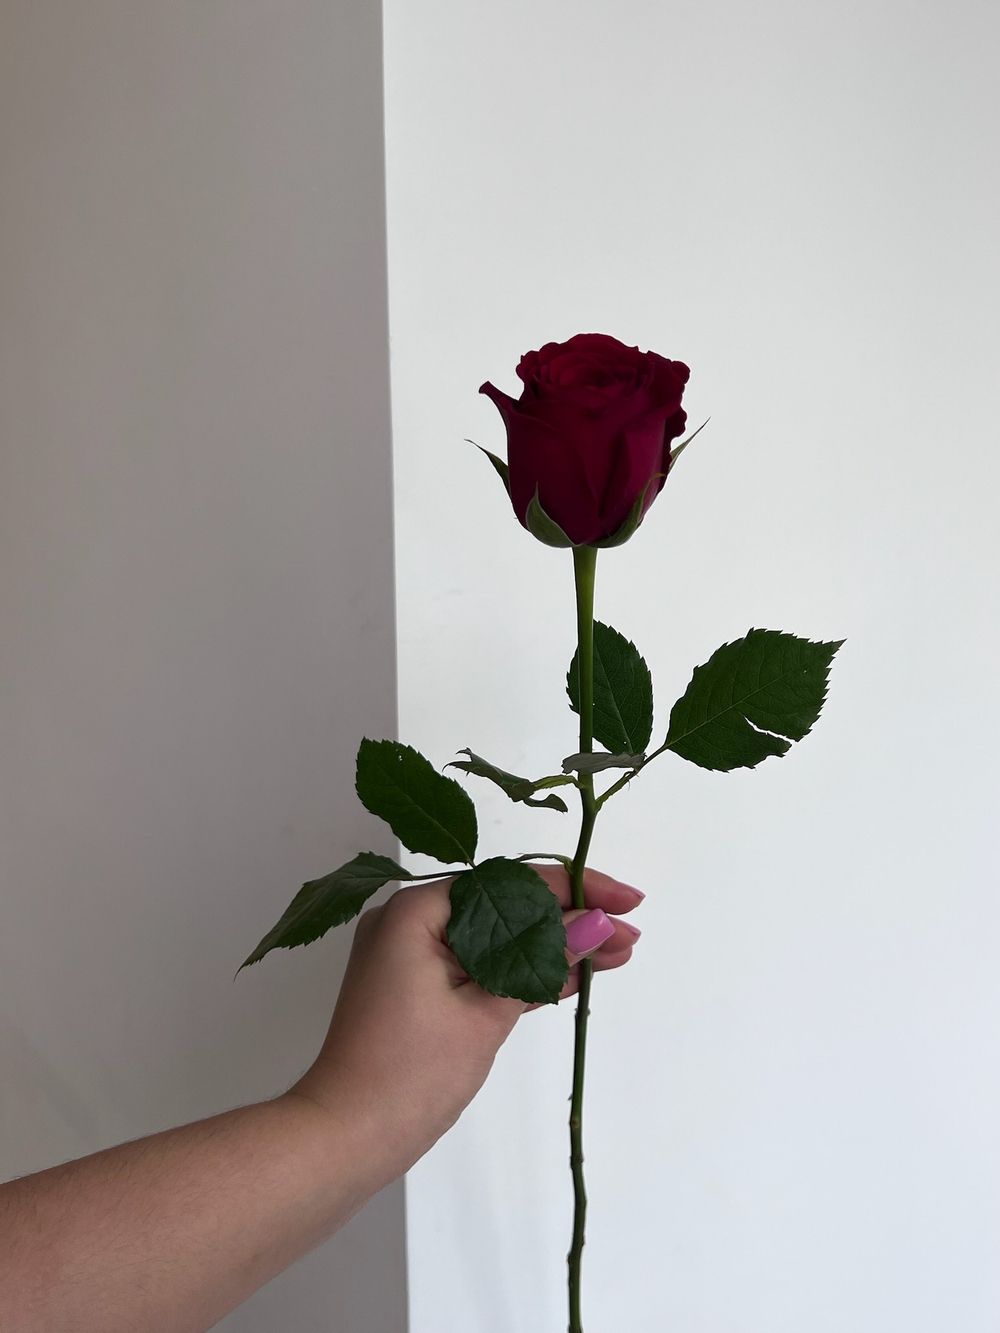 Роза красная (50см) АКЦИЯ